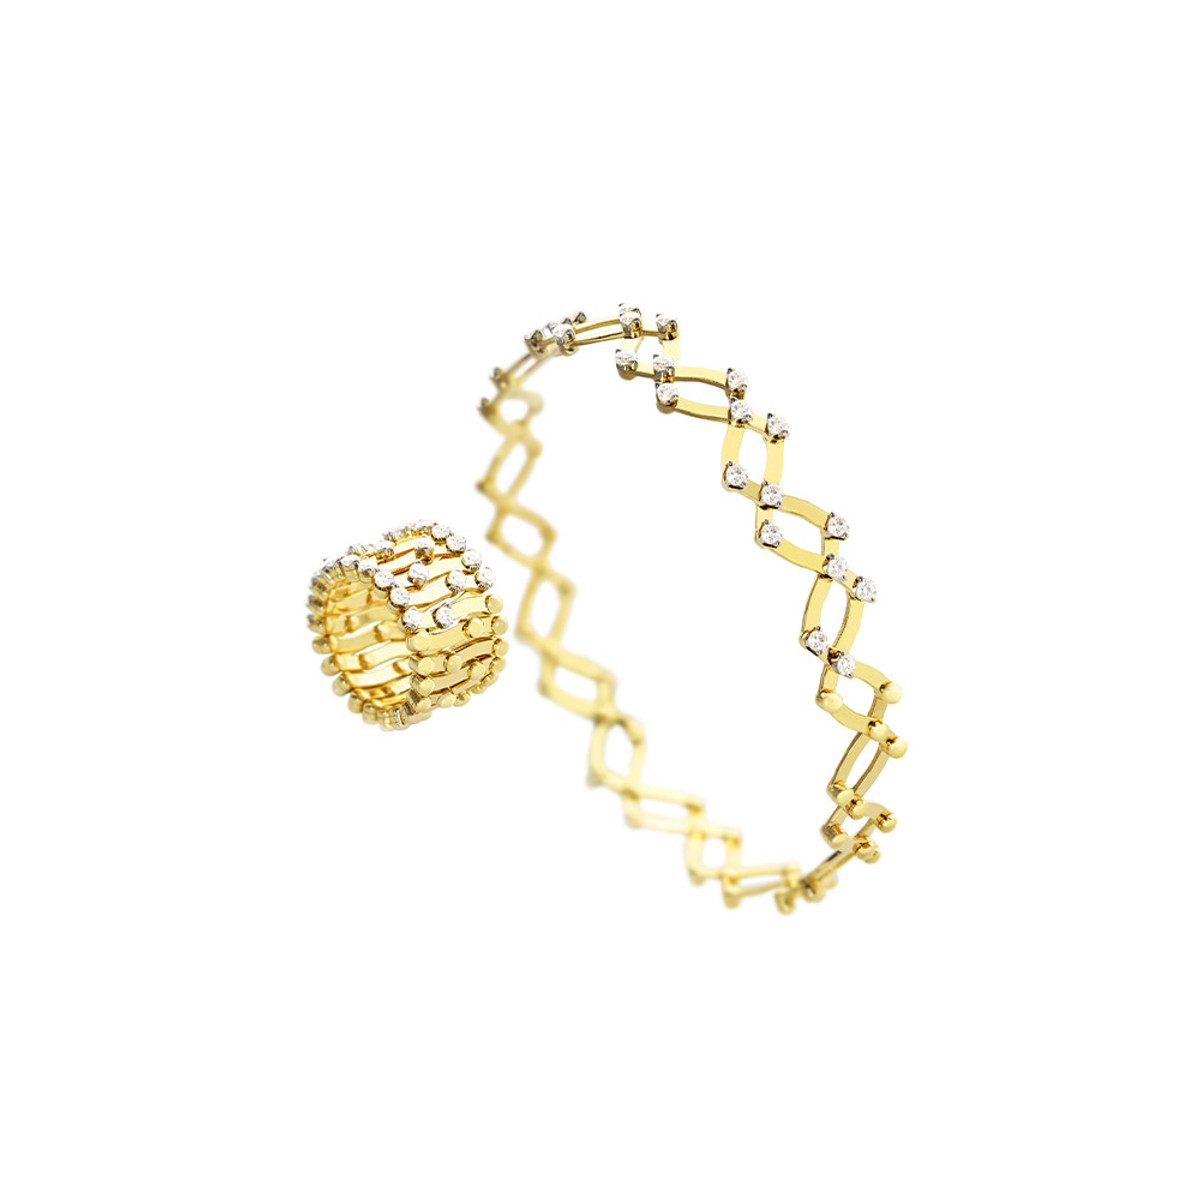 Serafino Consoli 18K White & Yellow Gold Diamond Ring Bracelet-56550